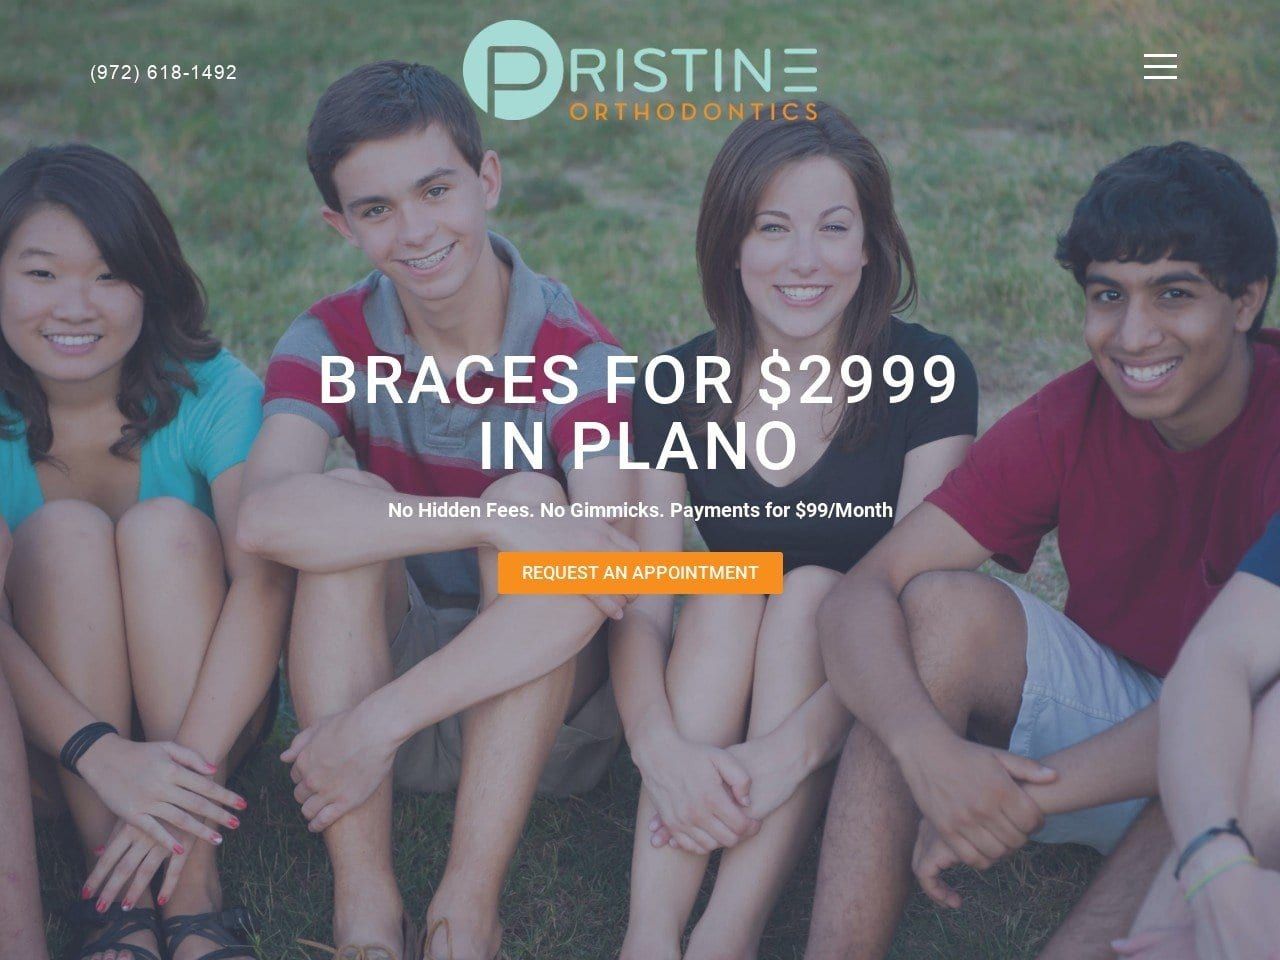 Pristine Orthodontics Website Screenshot from pristineorthodontics.com